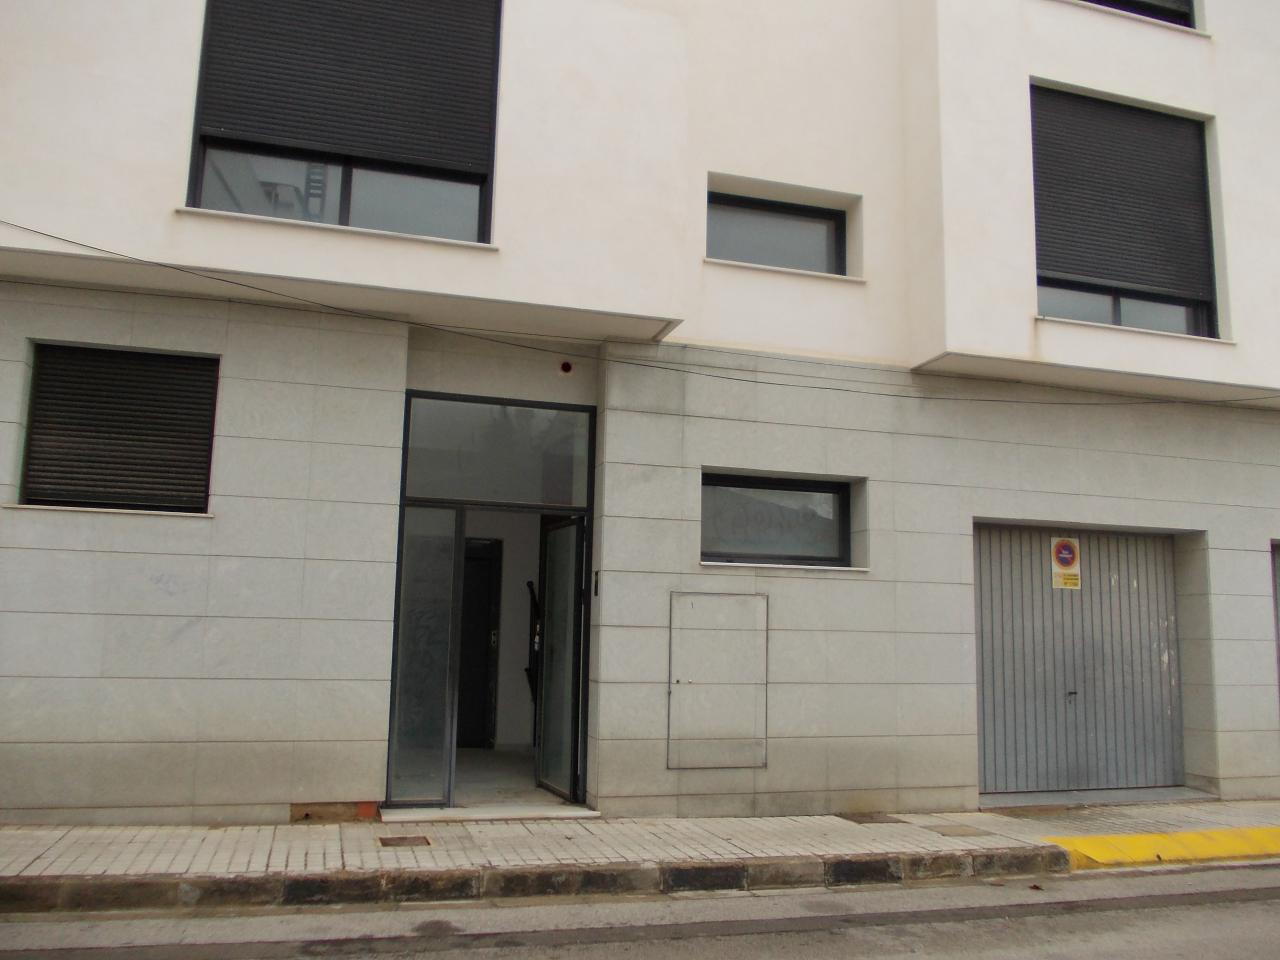 Ref SH60574575 279m2 Business premises for sale in Bellreguard, Valencia, Spain